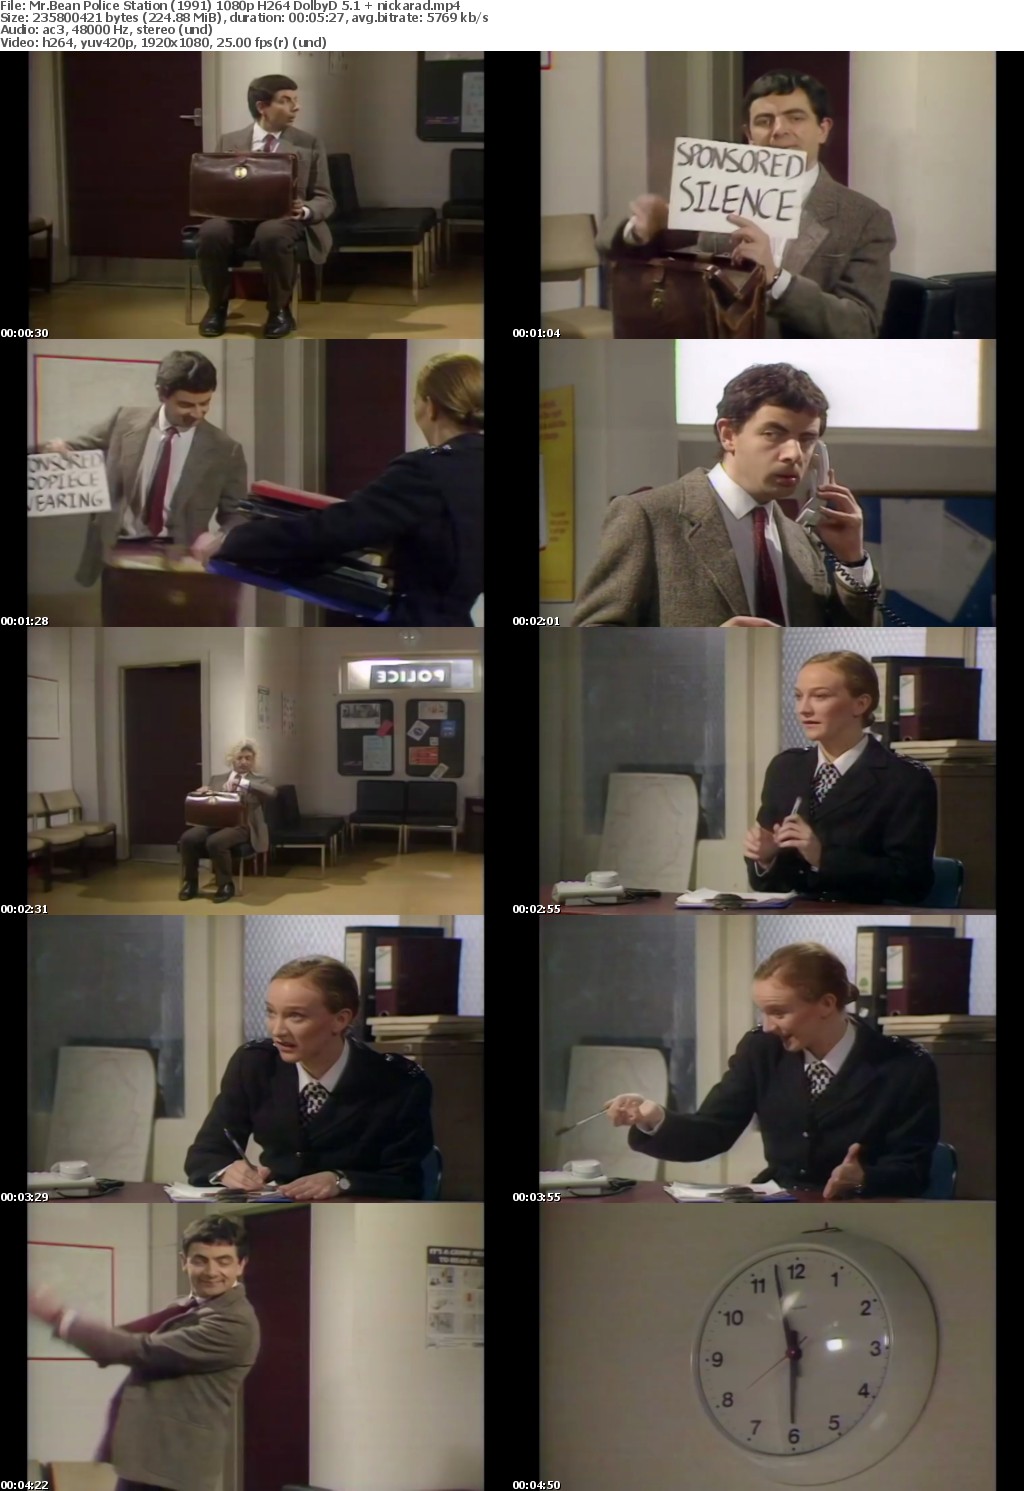 Mr Bean Police Station (1991) 1080p H264 DolbyD 5 1 nickarad